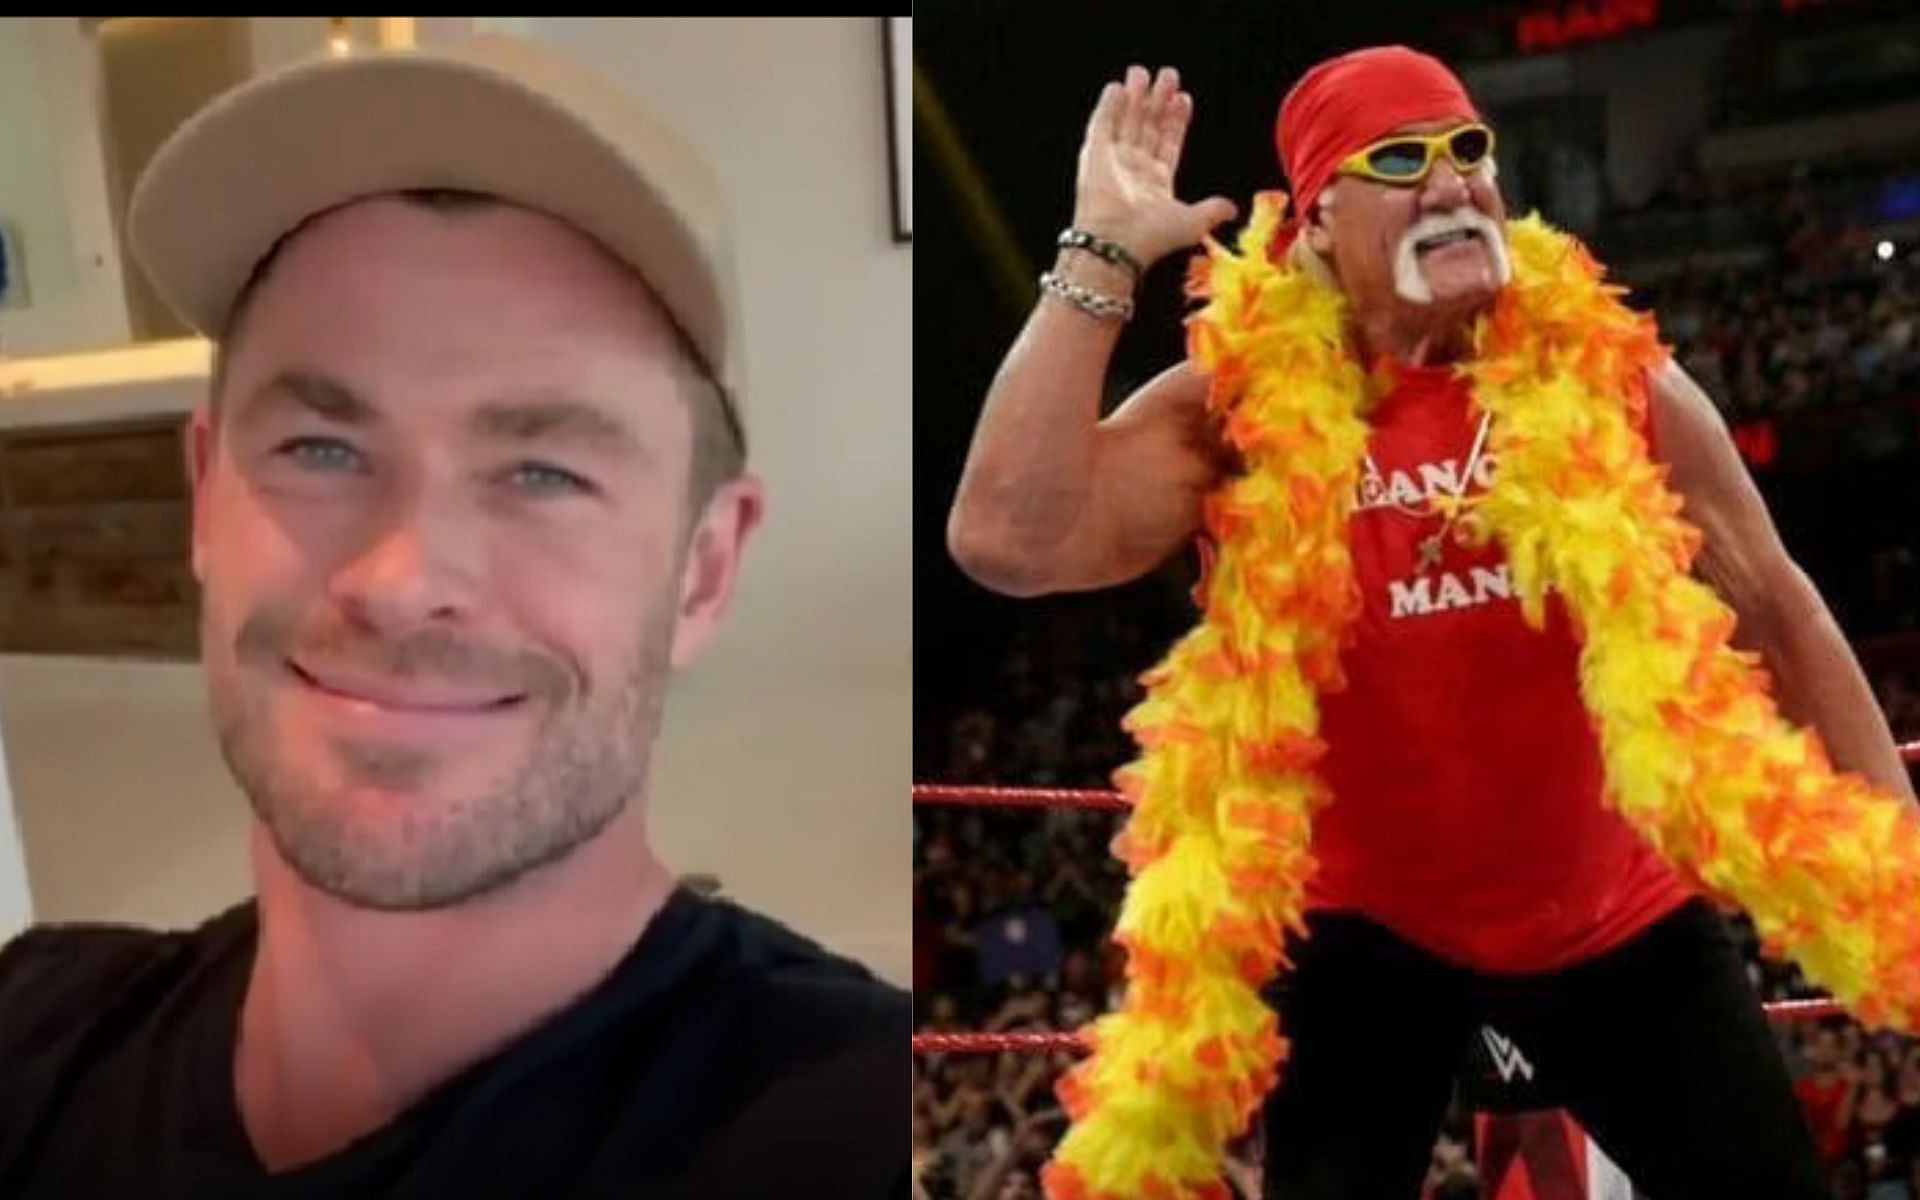 Chris Hemsworth will be portraying Hulk Hogan in the biopic